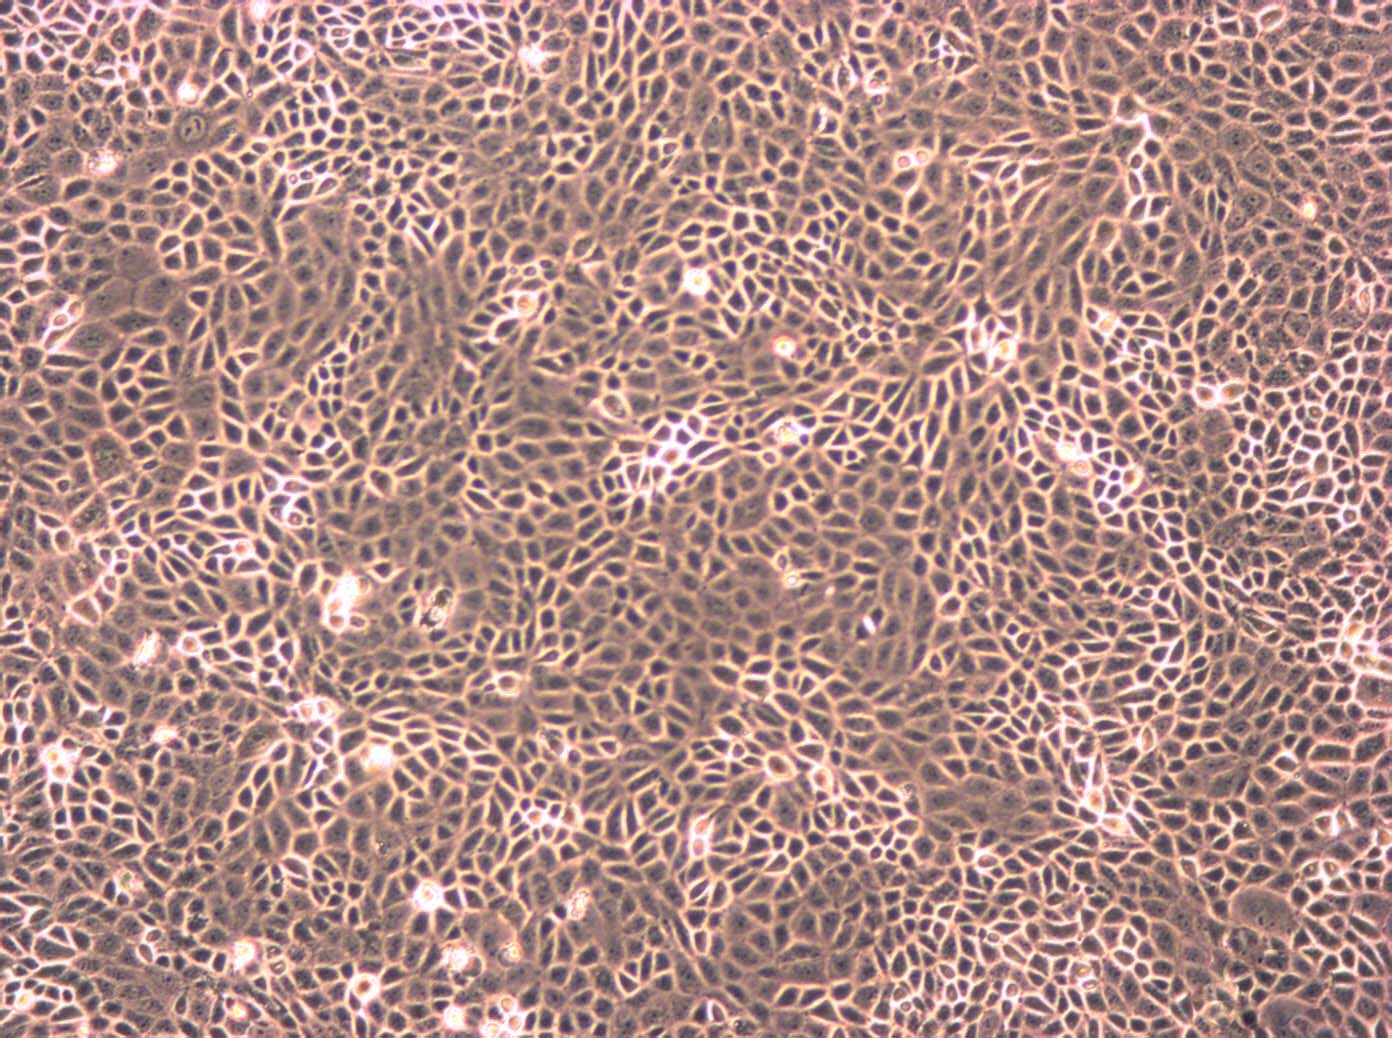 NCI-H1993 Cells|人肺癌需消化细胞系,NCI-H1993 Cell